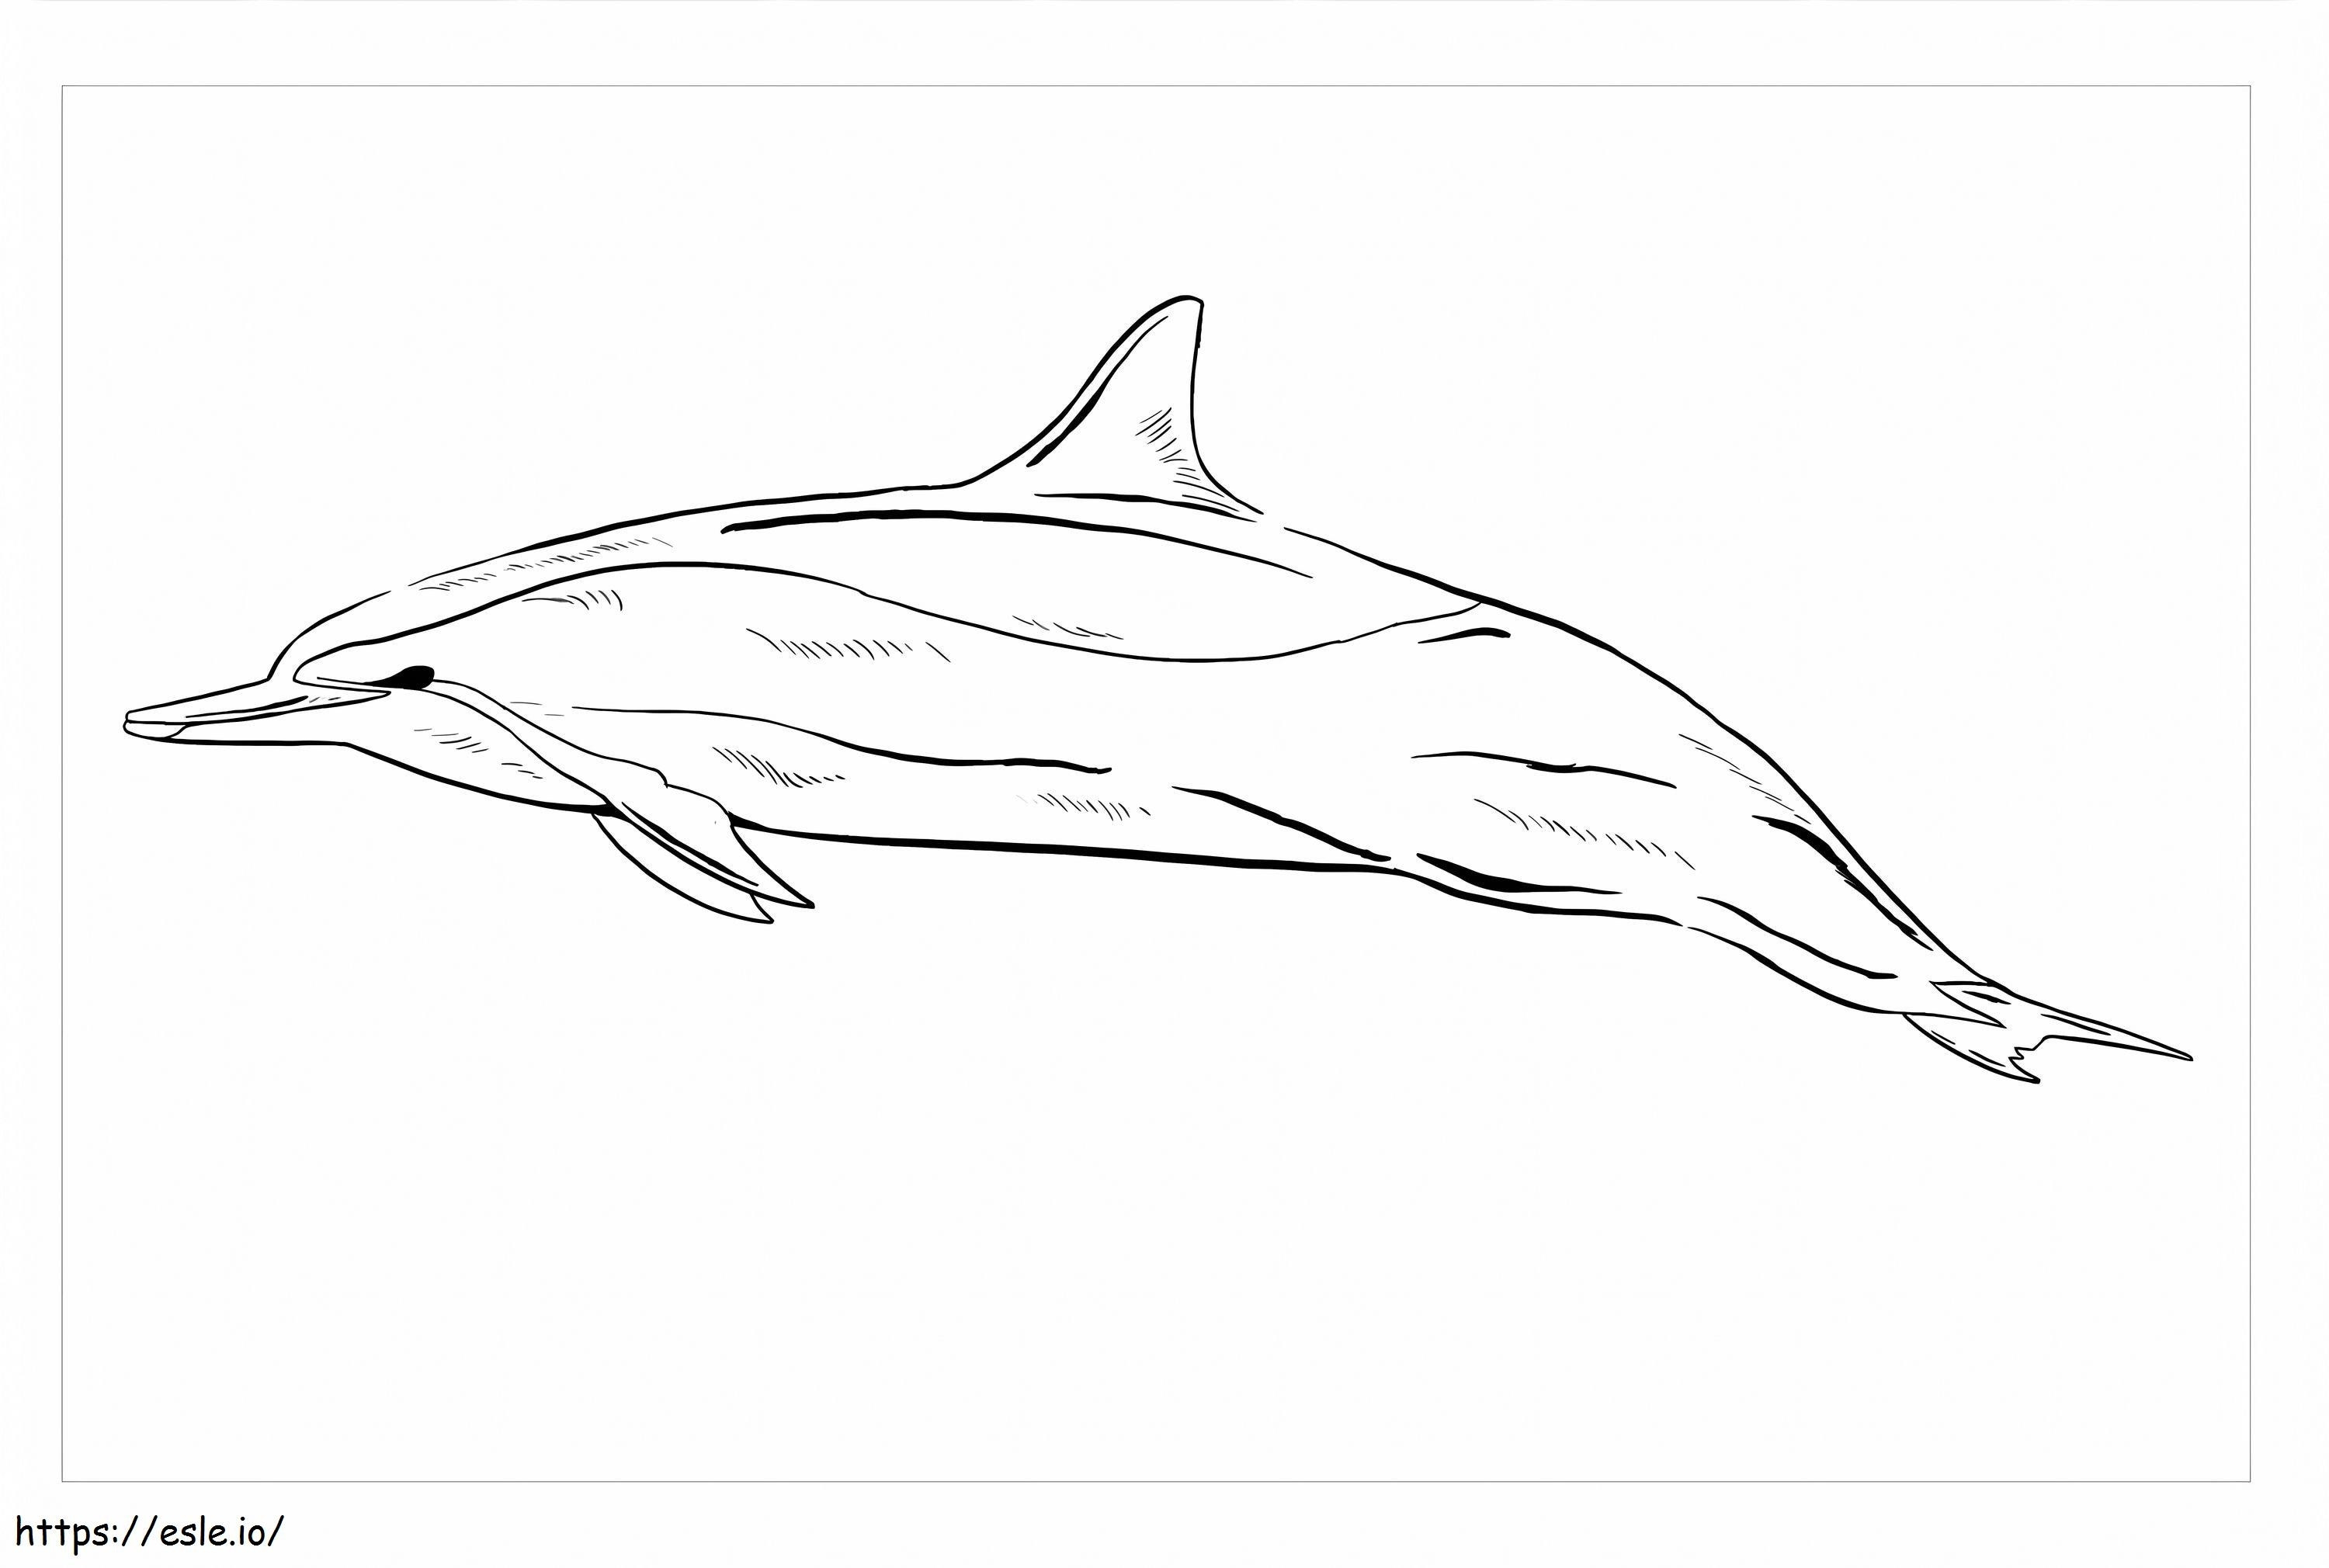 Delfinul Spinner de colorat